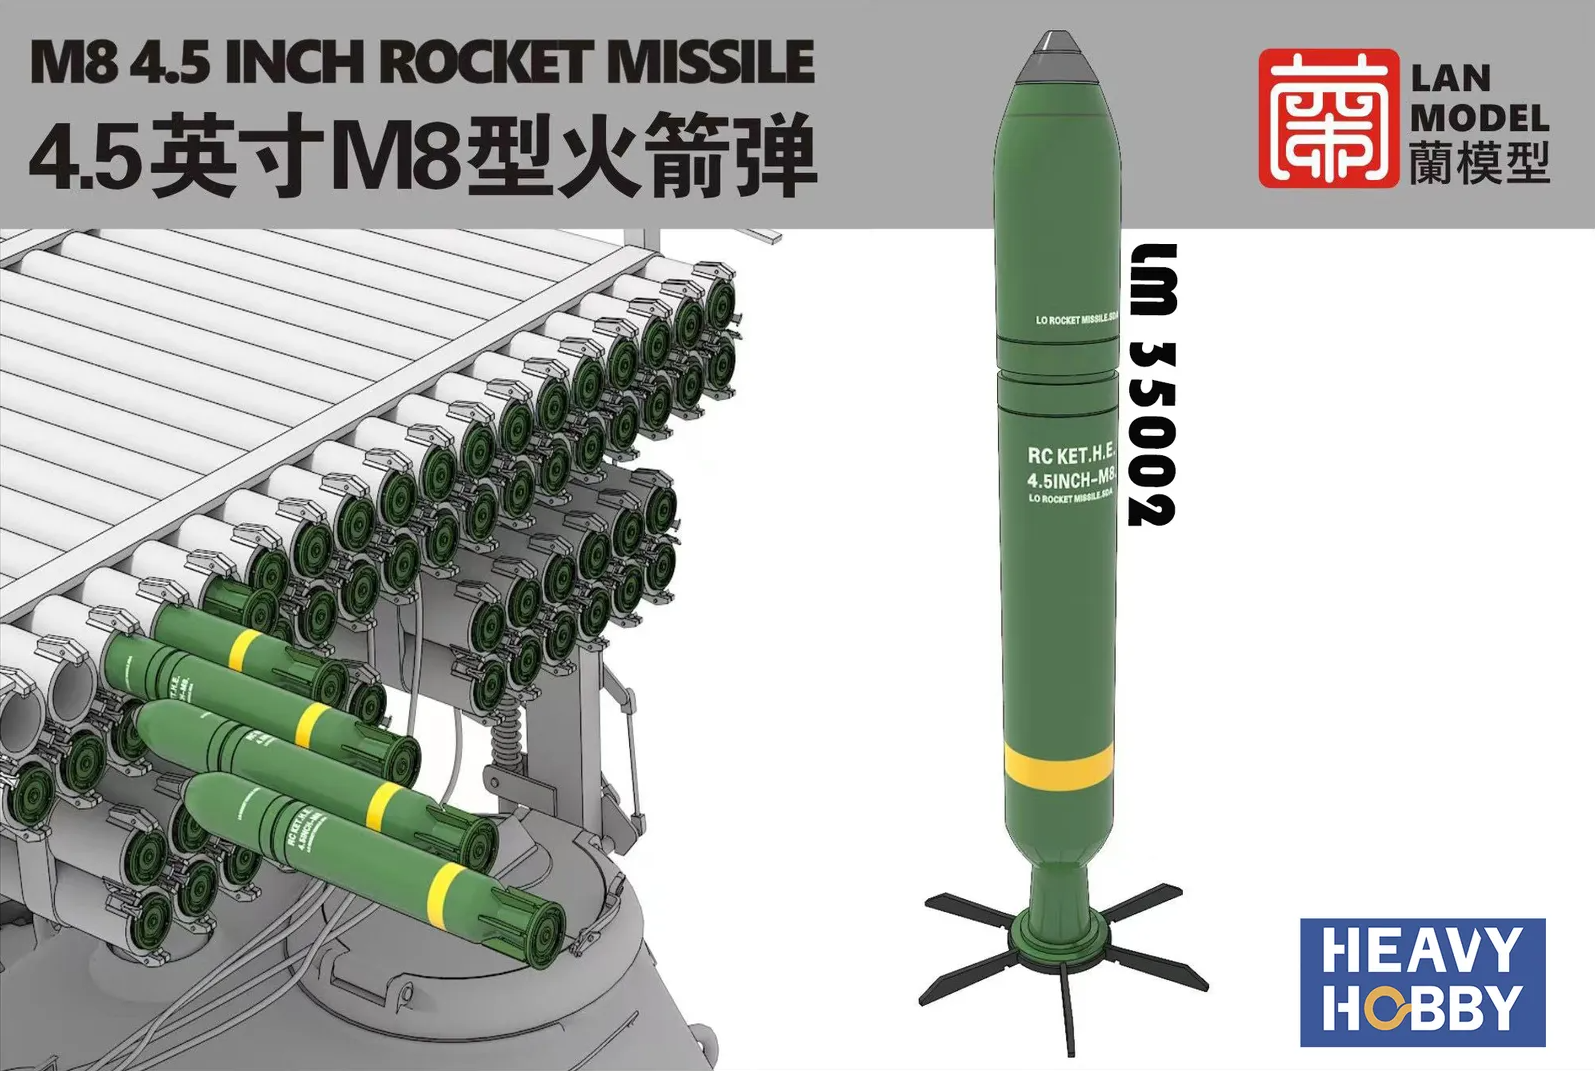 LM-35002  дополнения из металла  M8 4.5 inch rocket missile for T34 "Calliope"  (1:35)